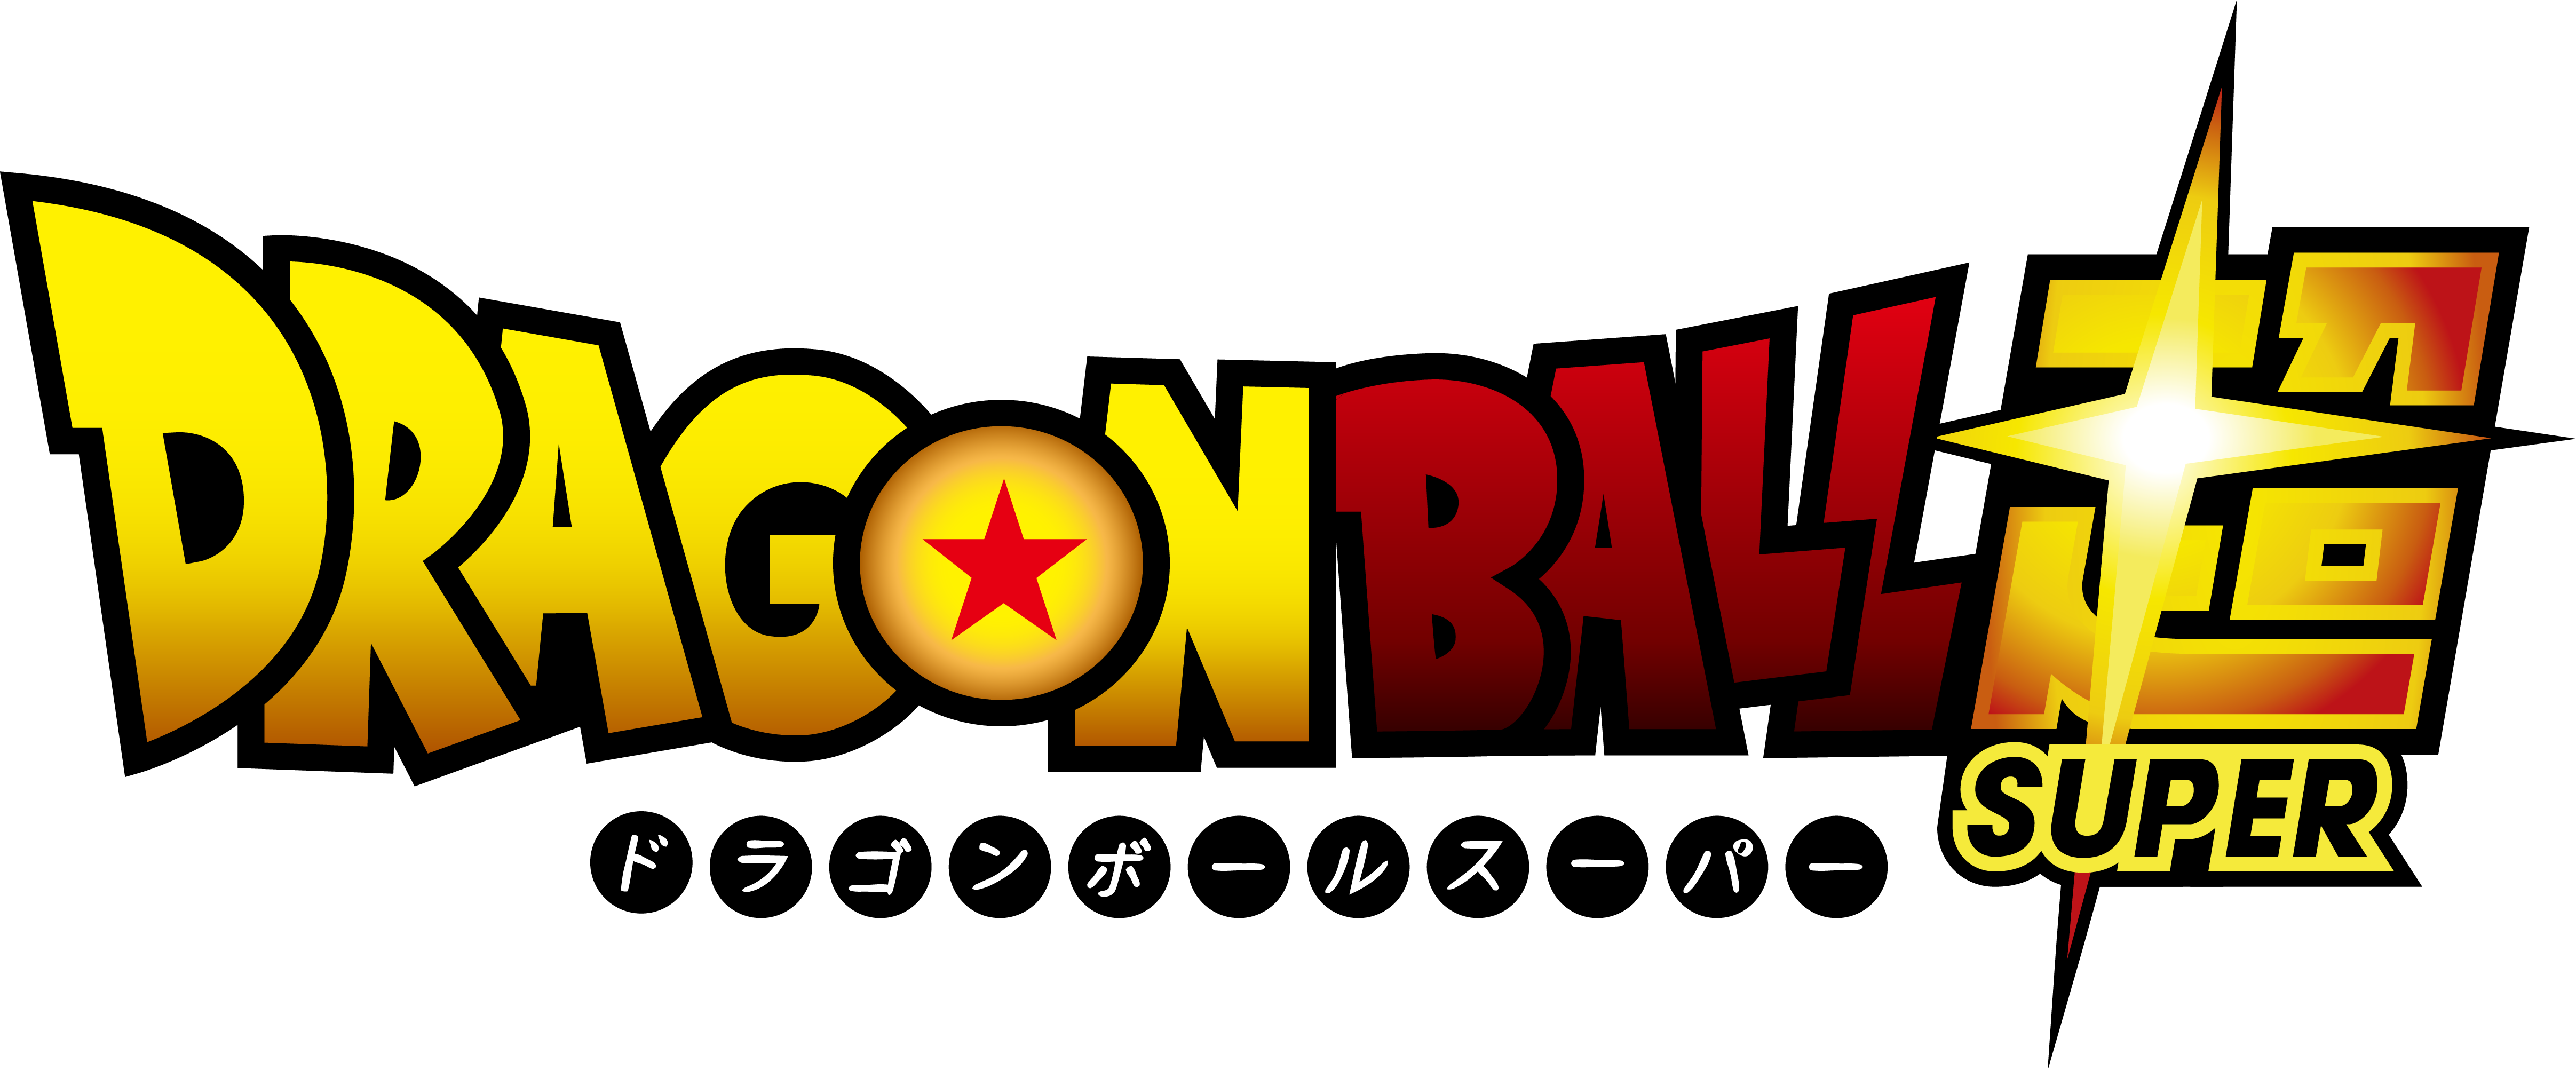 dragon_ball_super_logo_by_darcklp-d93gk4r.png